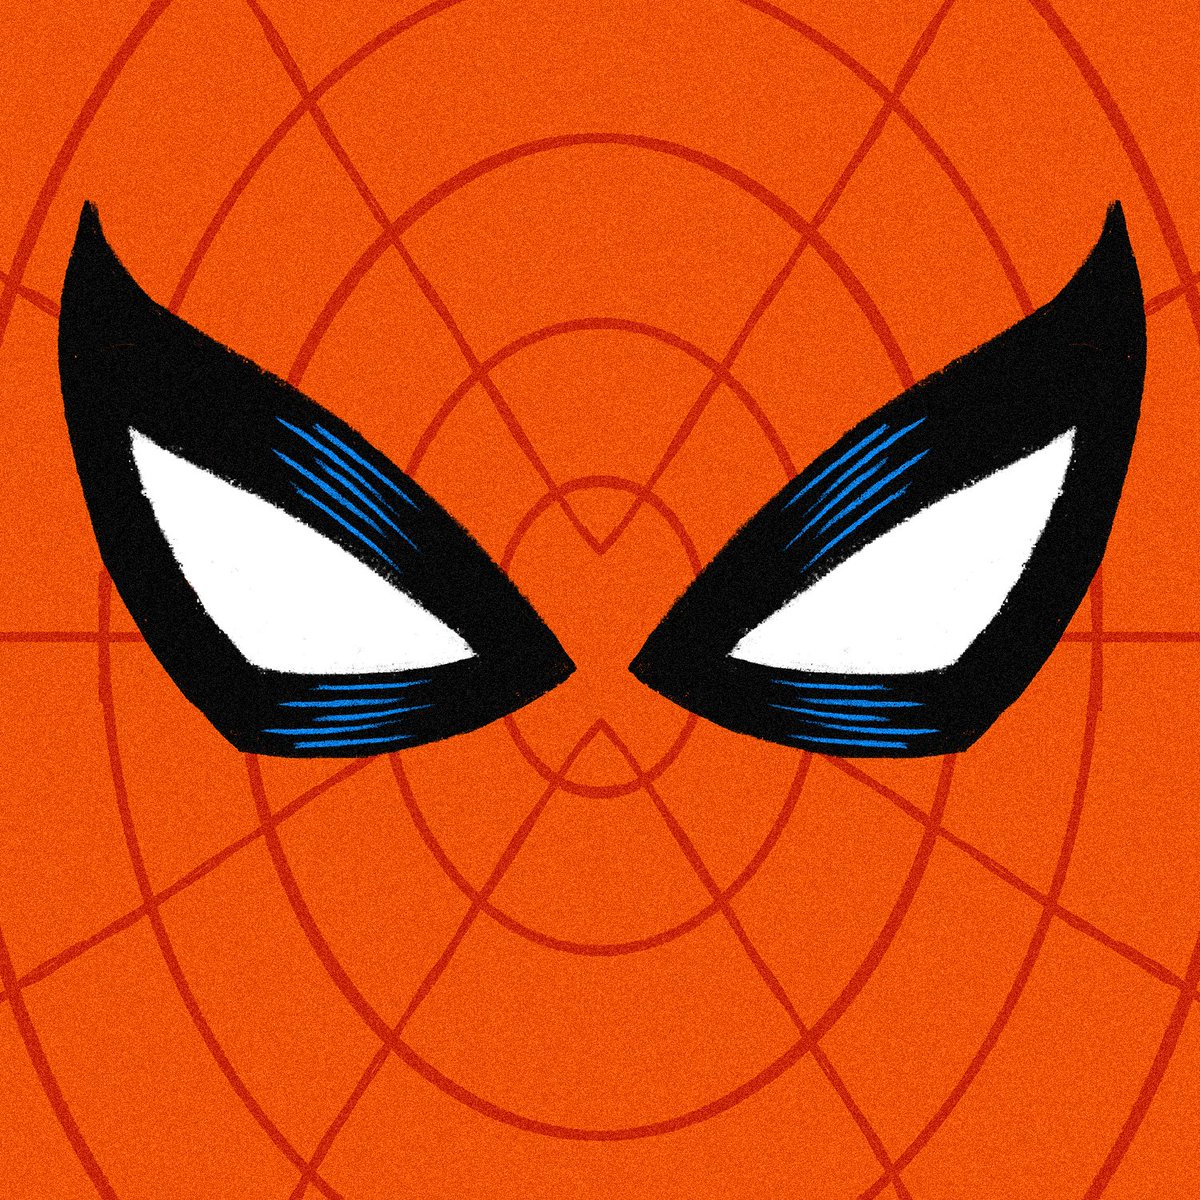 RT @HazenBecker: A Spider-Man Master Thread:
#SpiderMan #Marvel #Comics #Illustration https://t.co/GHajlD9iFD